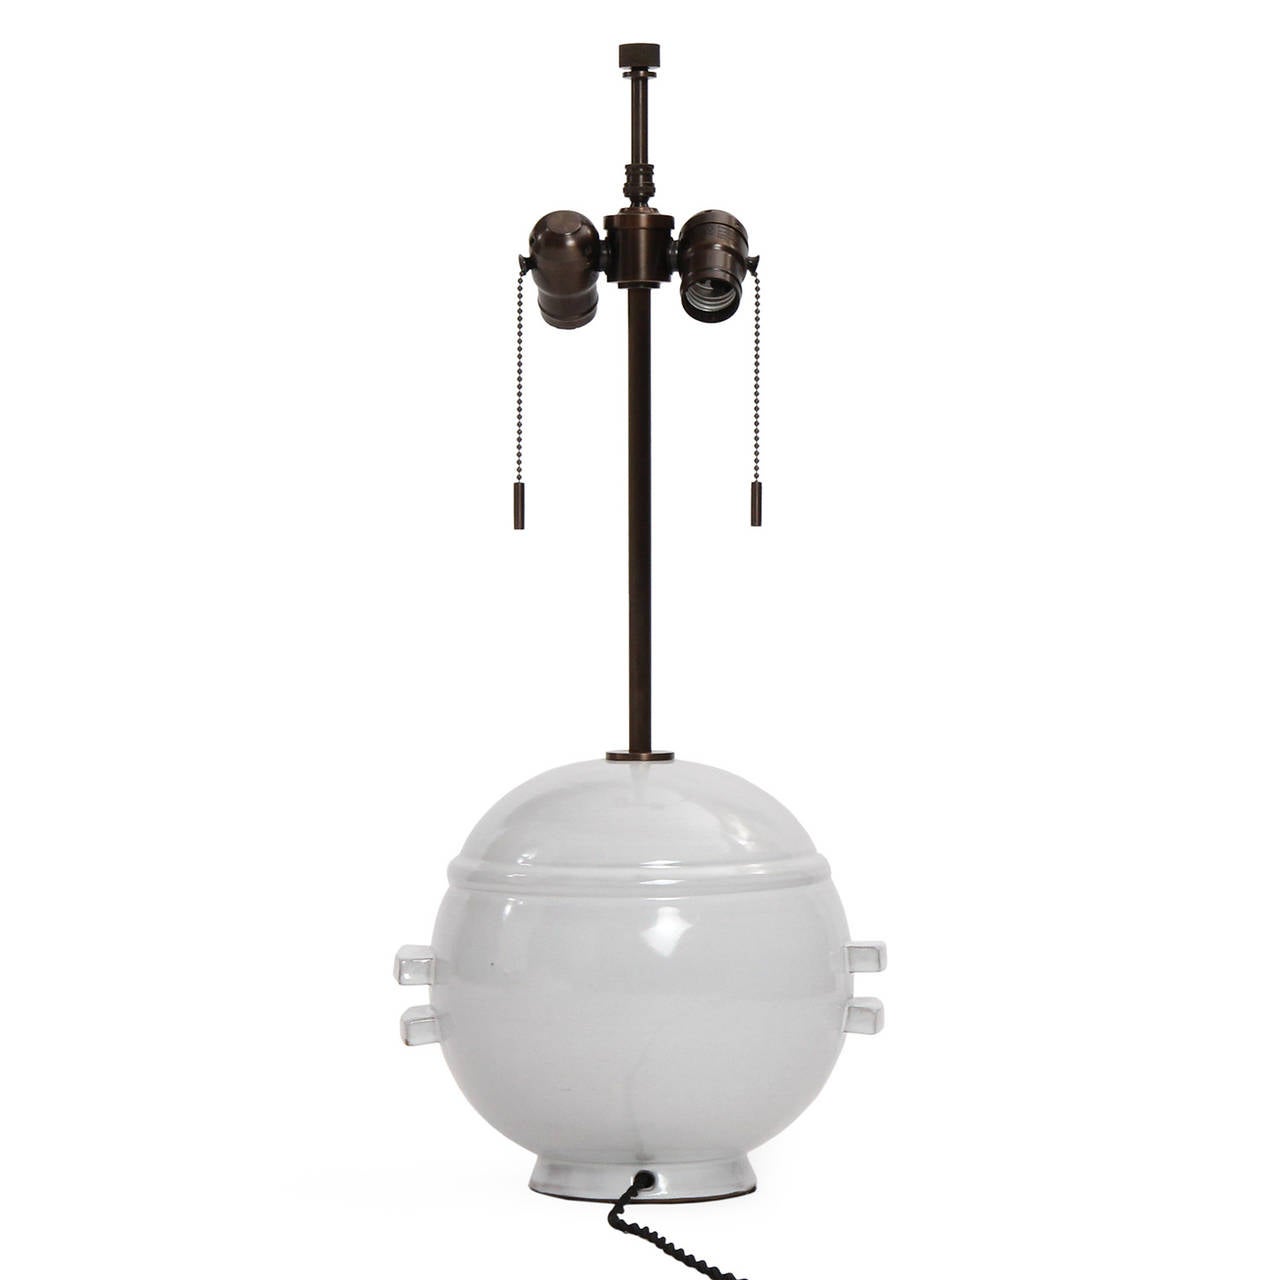 Mid-20th Century Spherical Ceramic Table Lamp